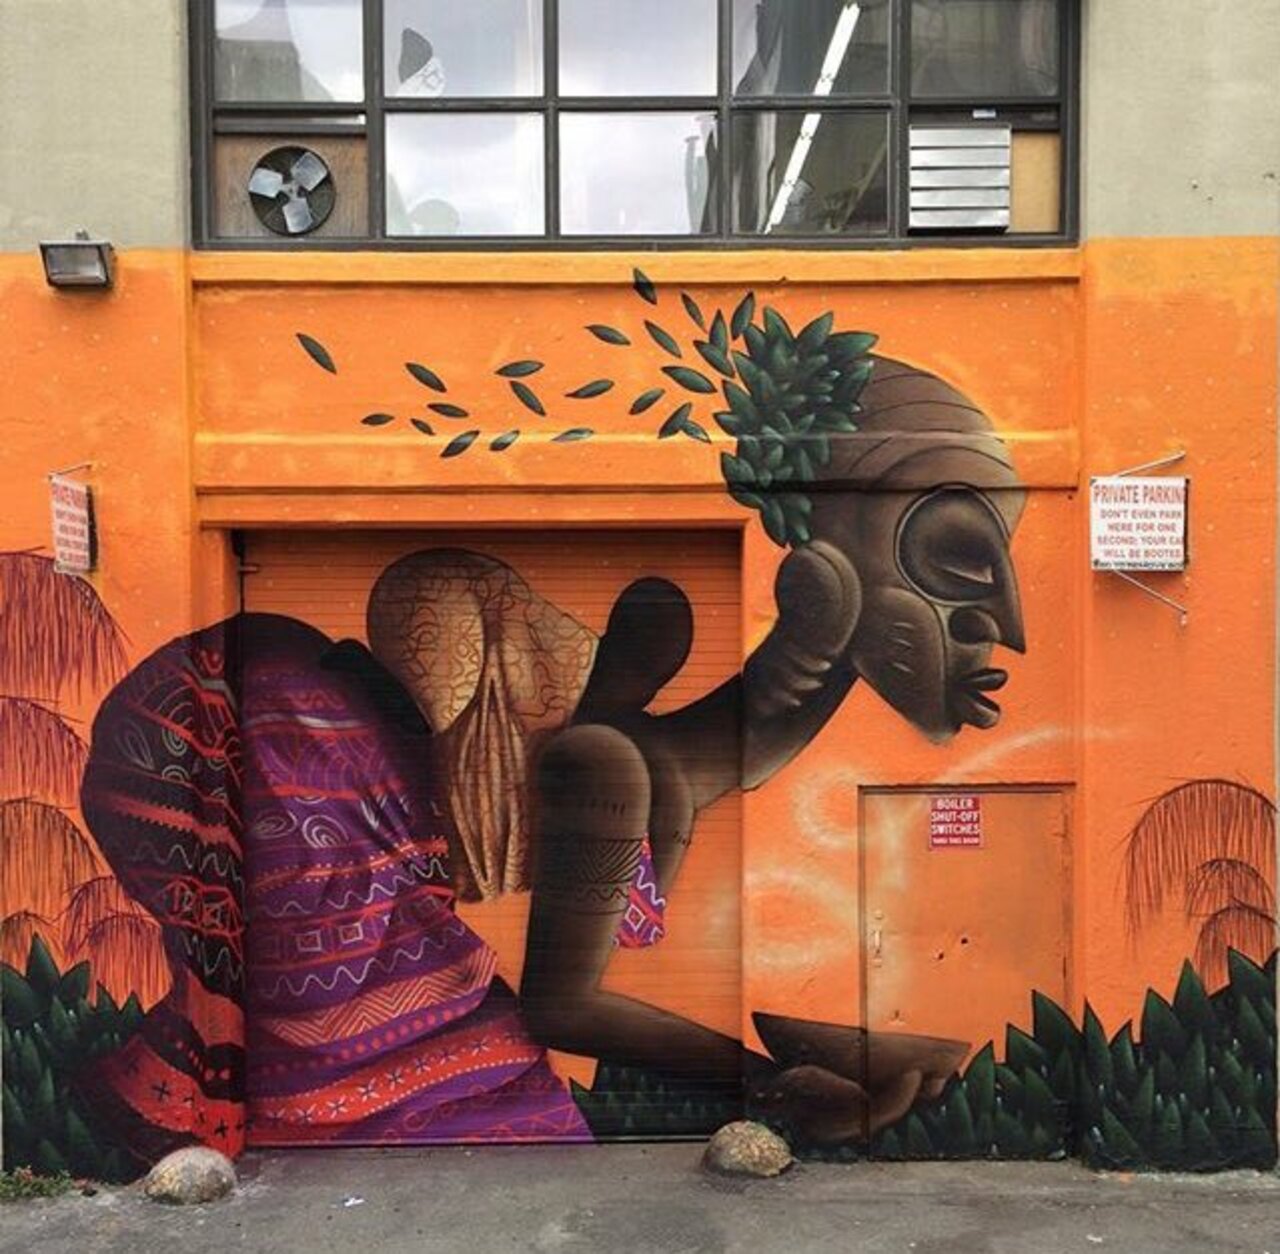 New Street Art by Alexandre Keto in NYC 

#art #graffiti #mural #streetart https://t.co/WcSYik0rOg